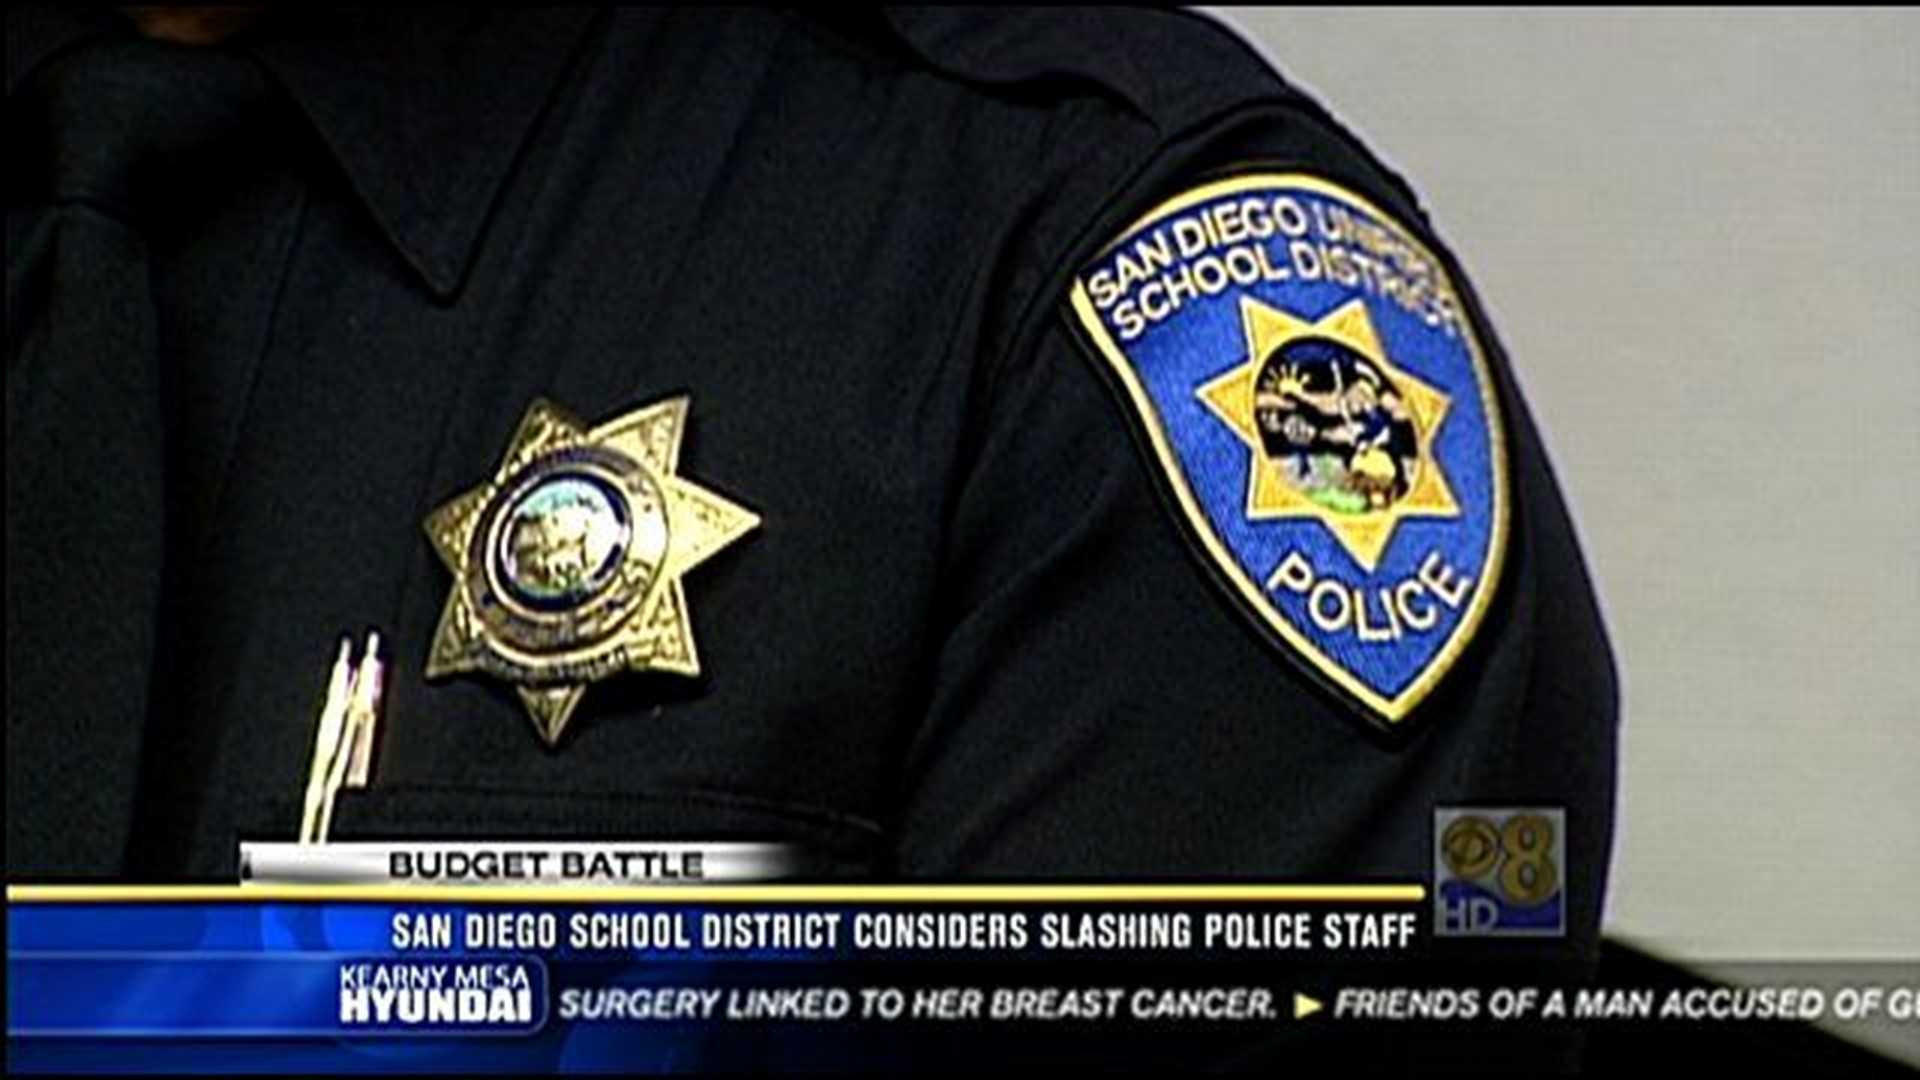 San Diego Unified School District considers slashing police staff ...